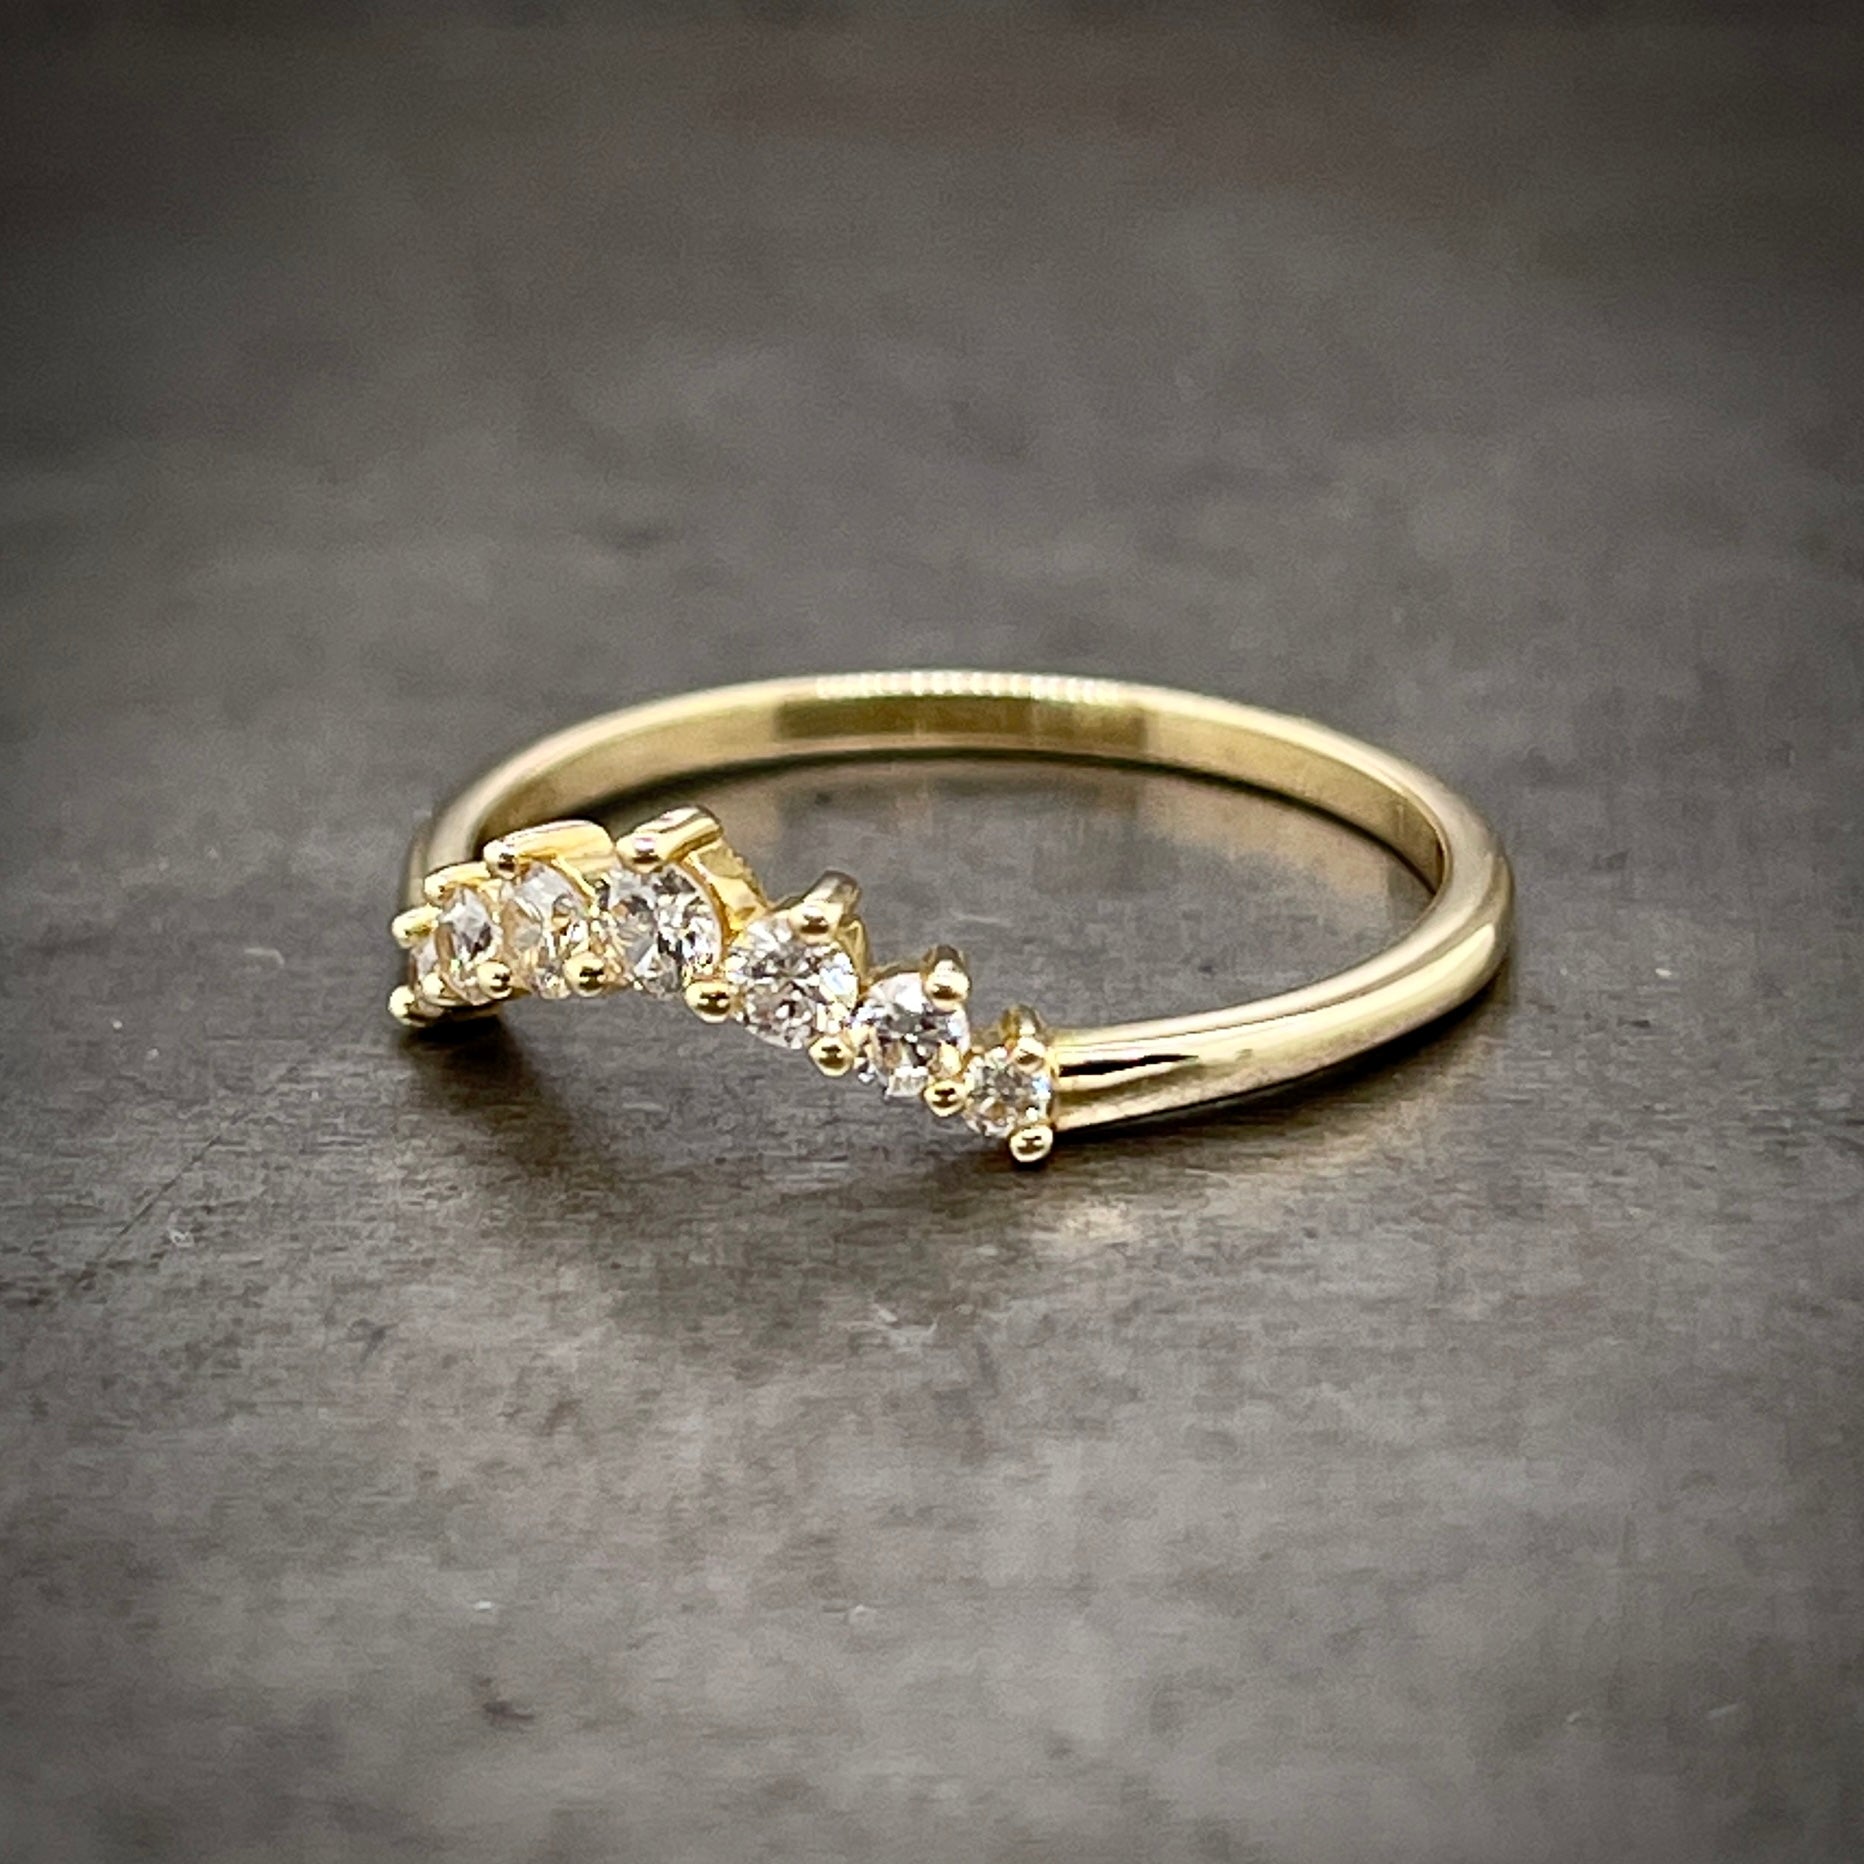 Angled side view of diamond tiara ring.